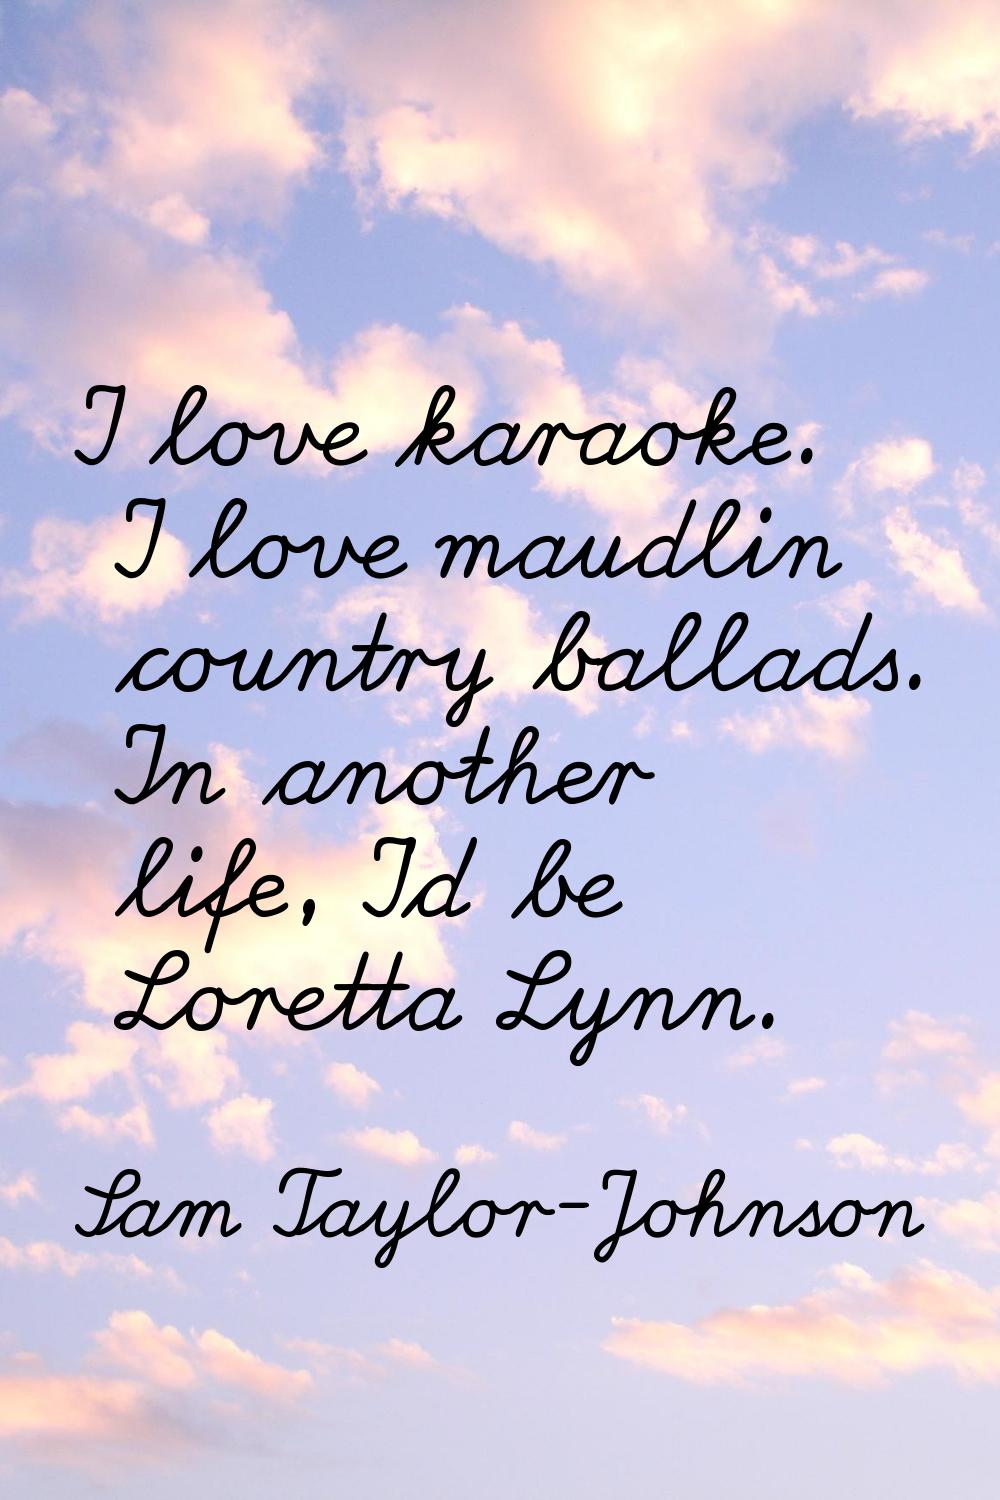 I love karaoke. I love maudlin country ballads. In another life, I'd be Loretta Lynn.